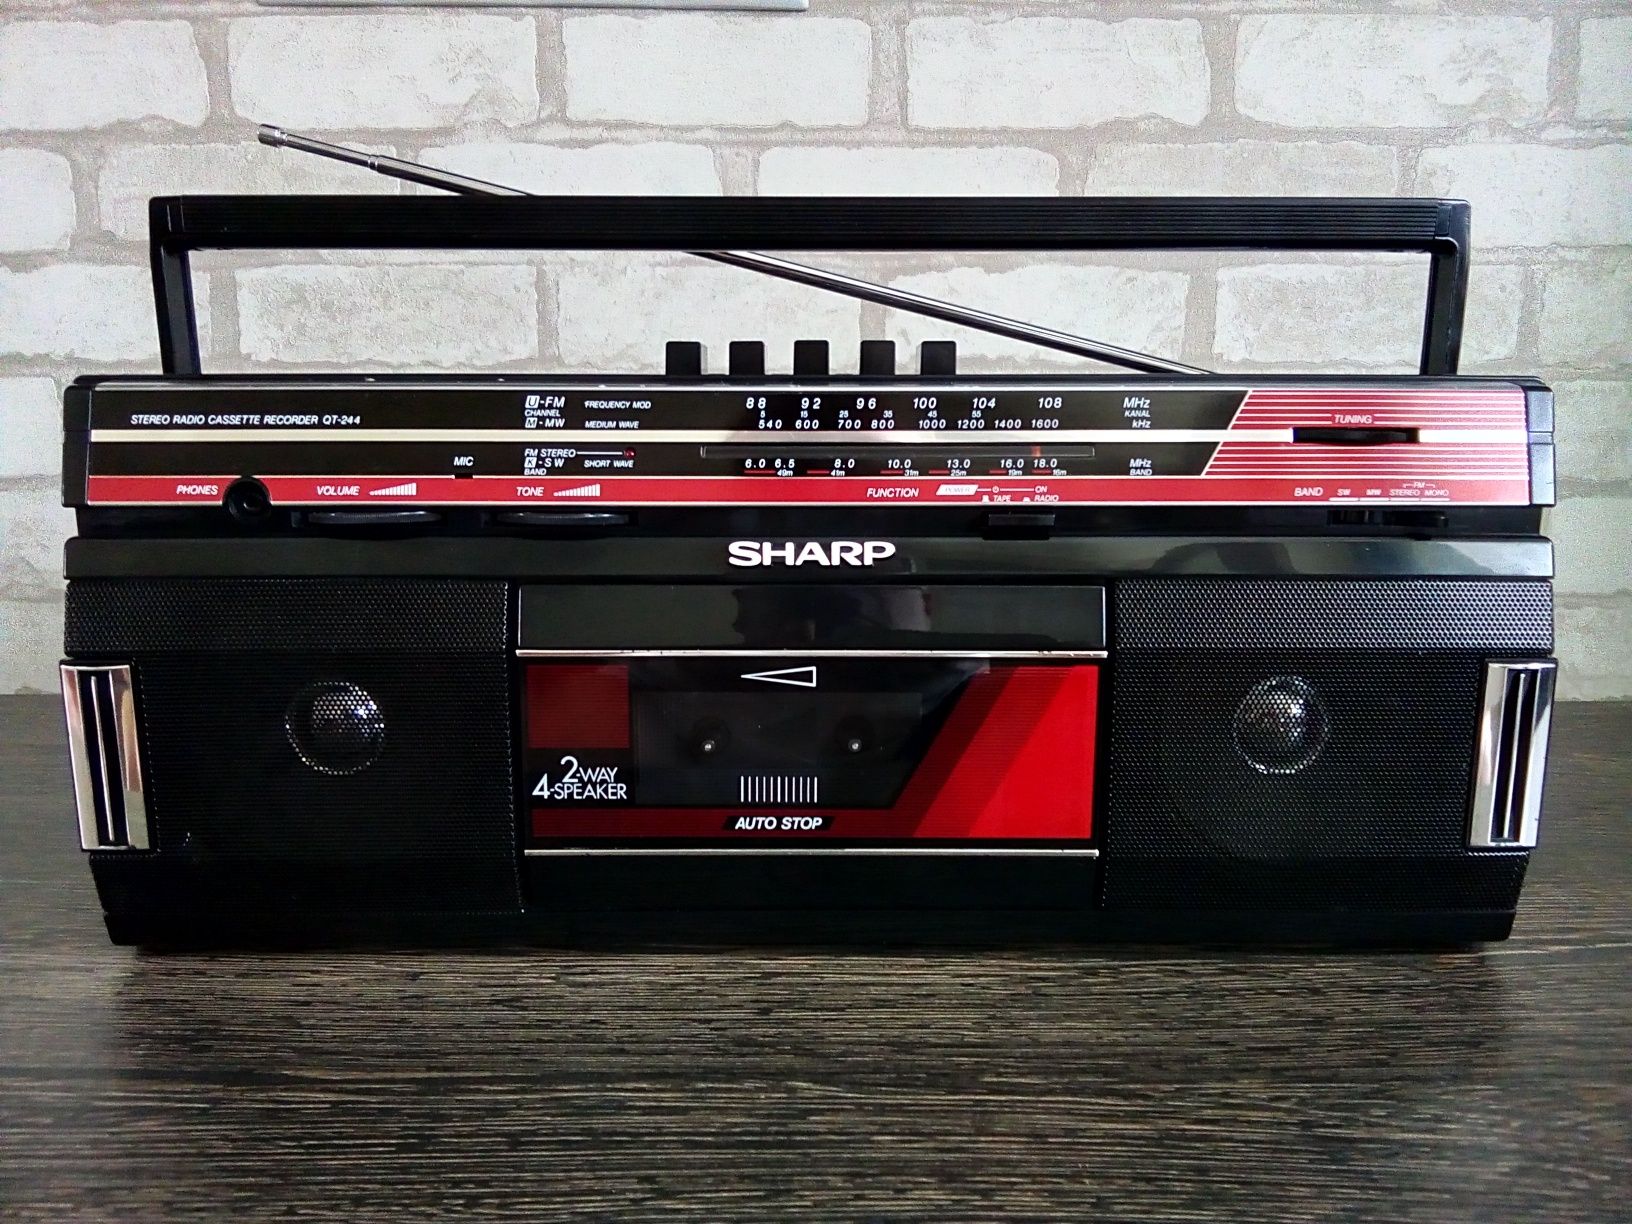 Sharp QT-242 H (BK) stereo radio cassette recorder